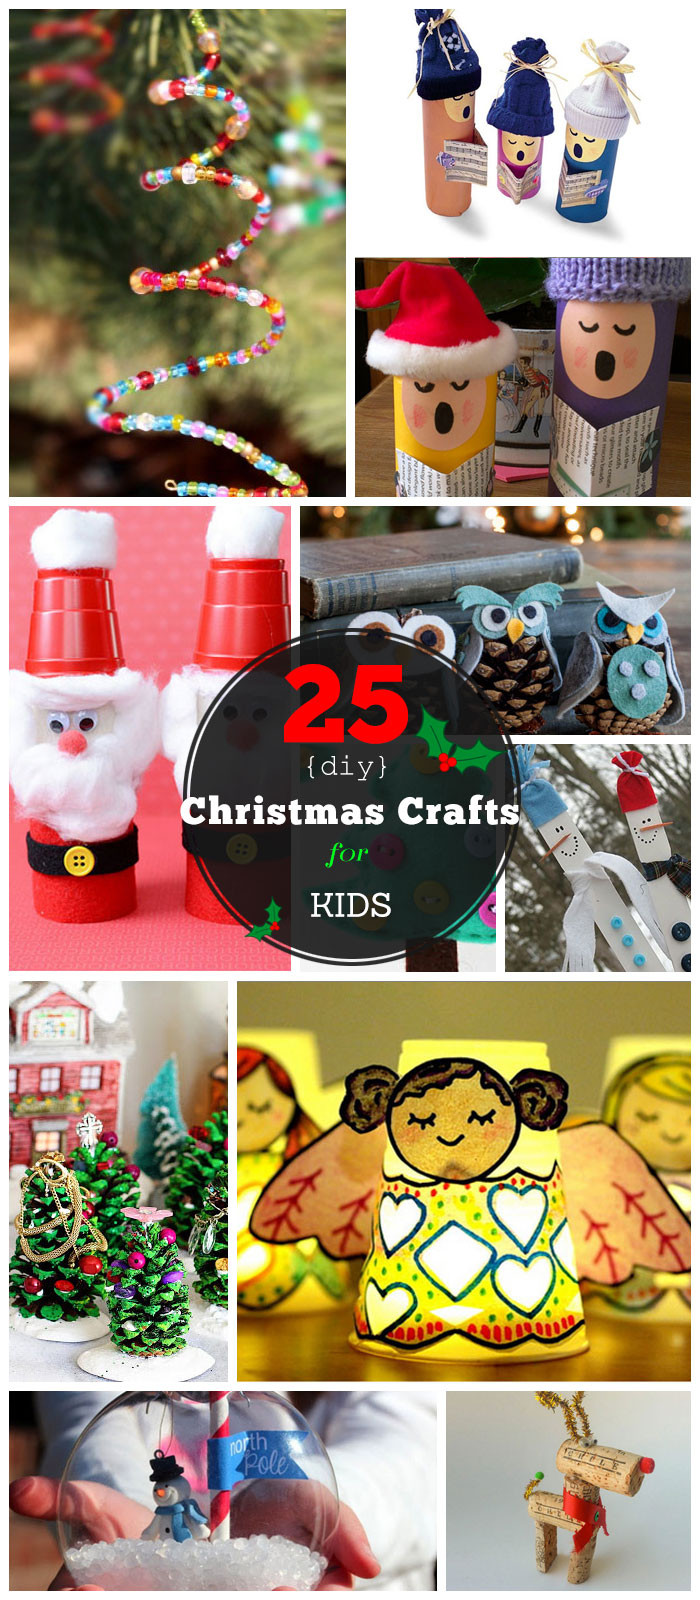 Crafts To Make For Christmas
 25 DIY Christmas Crafts for Kids to Make